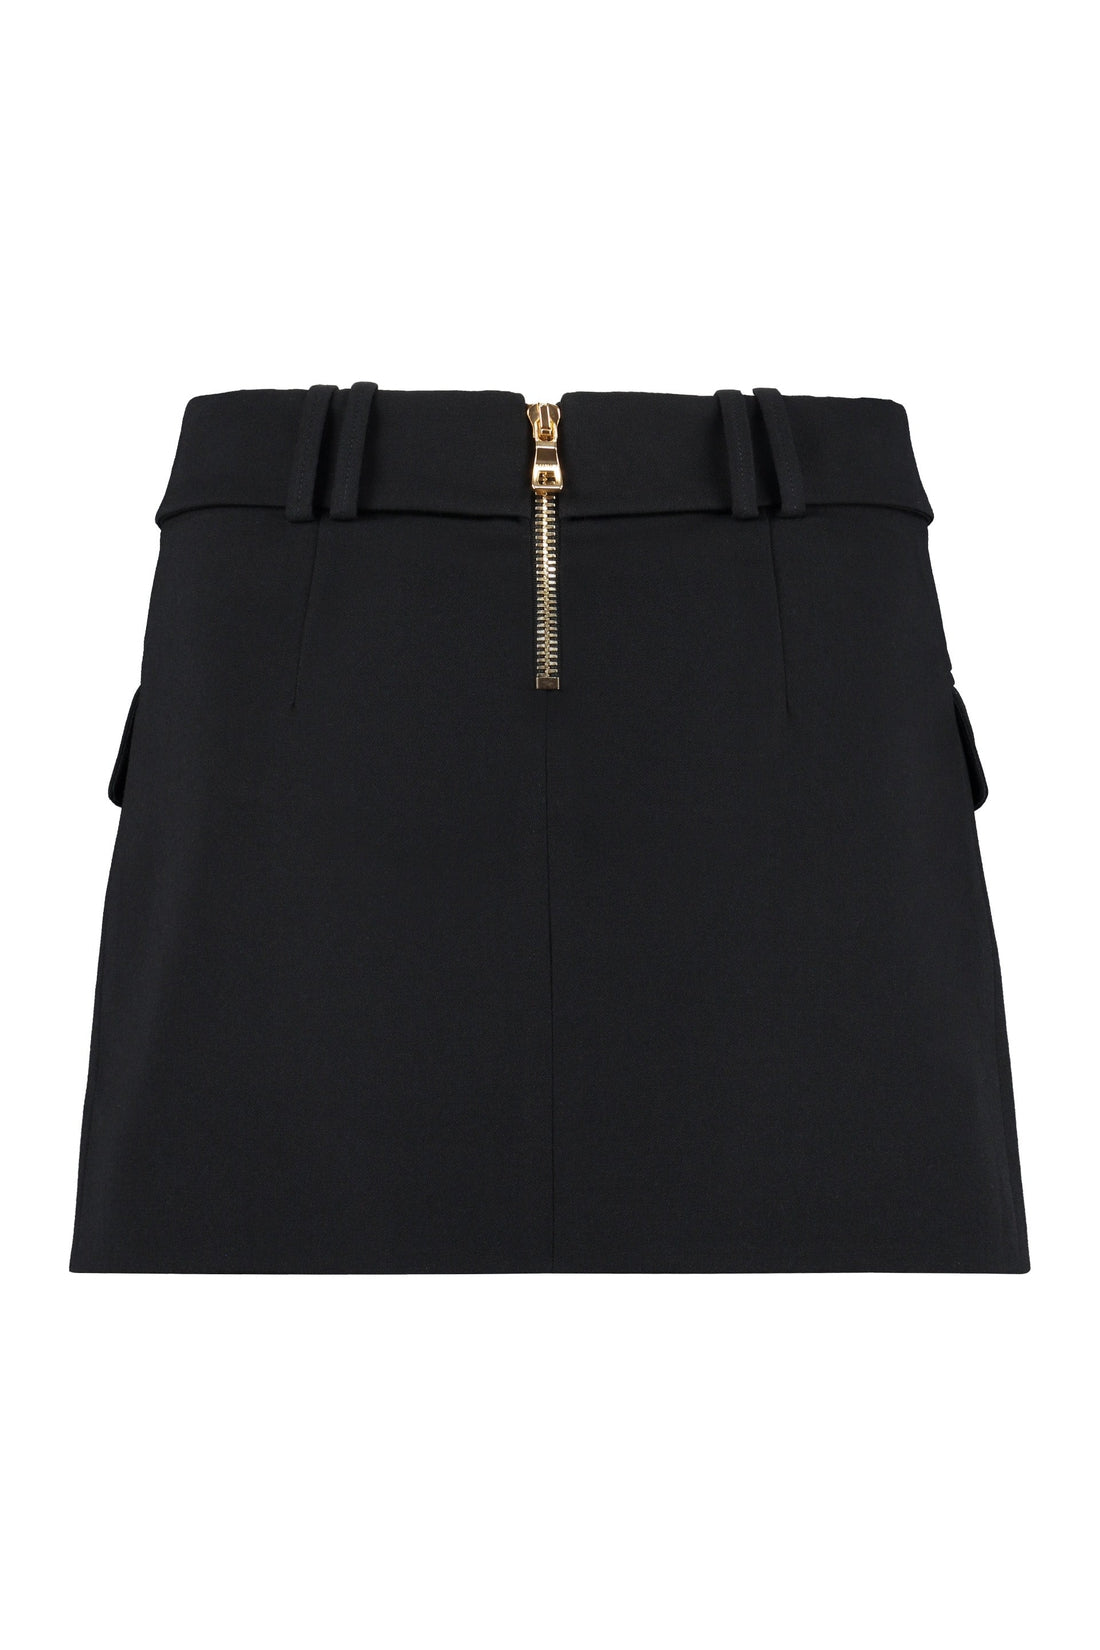 Balmain-OUTLET-SALE-Wool mini skirt-ARCHIVIST